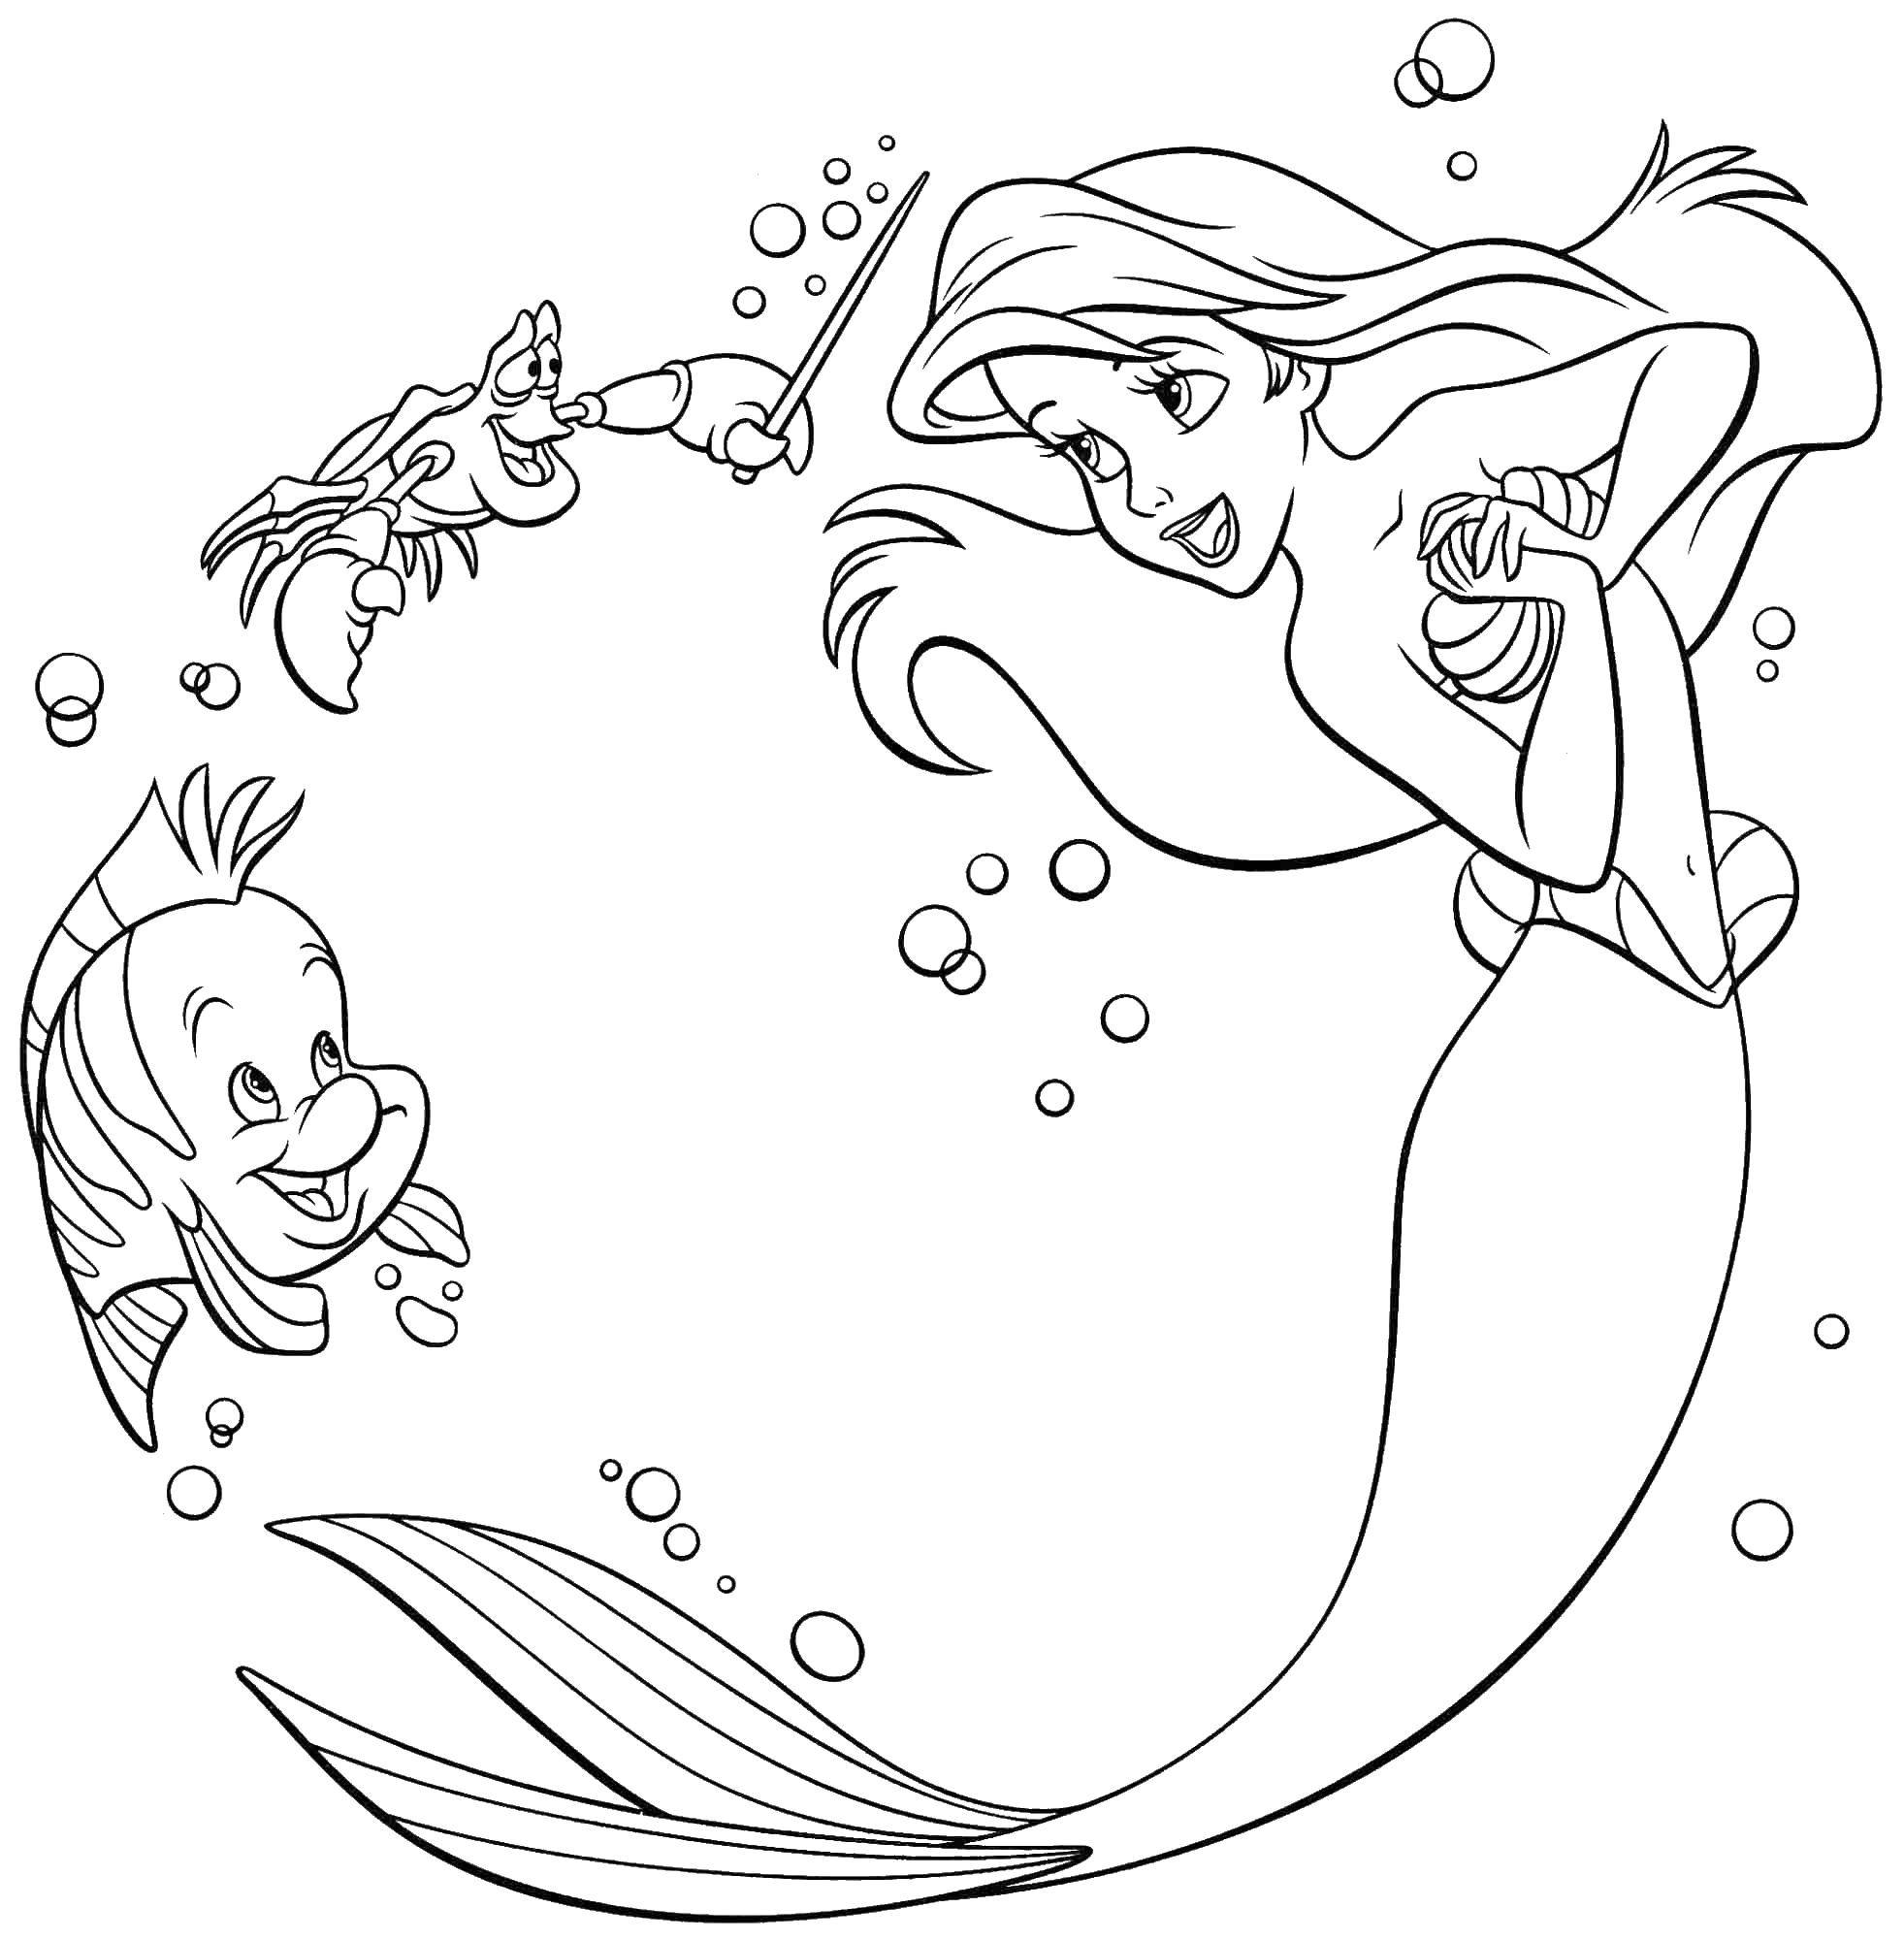 Coloring The little mermaid and her friends. Category The little mermaid. Tags:  the little mermaid, Princess, mermaid, Ariel.